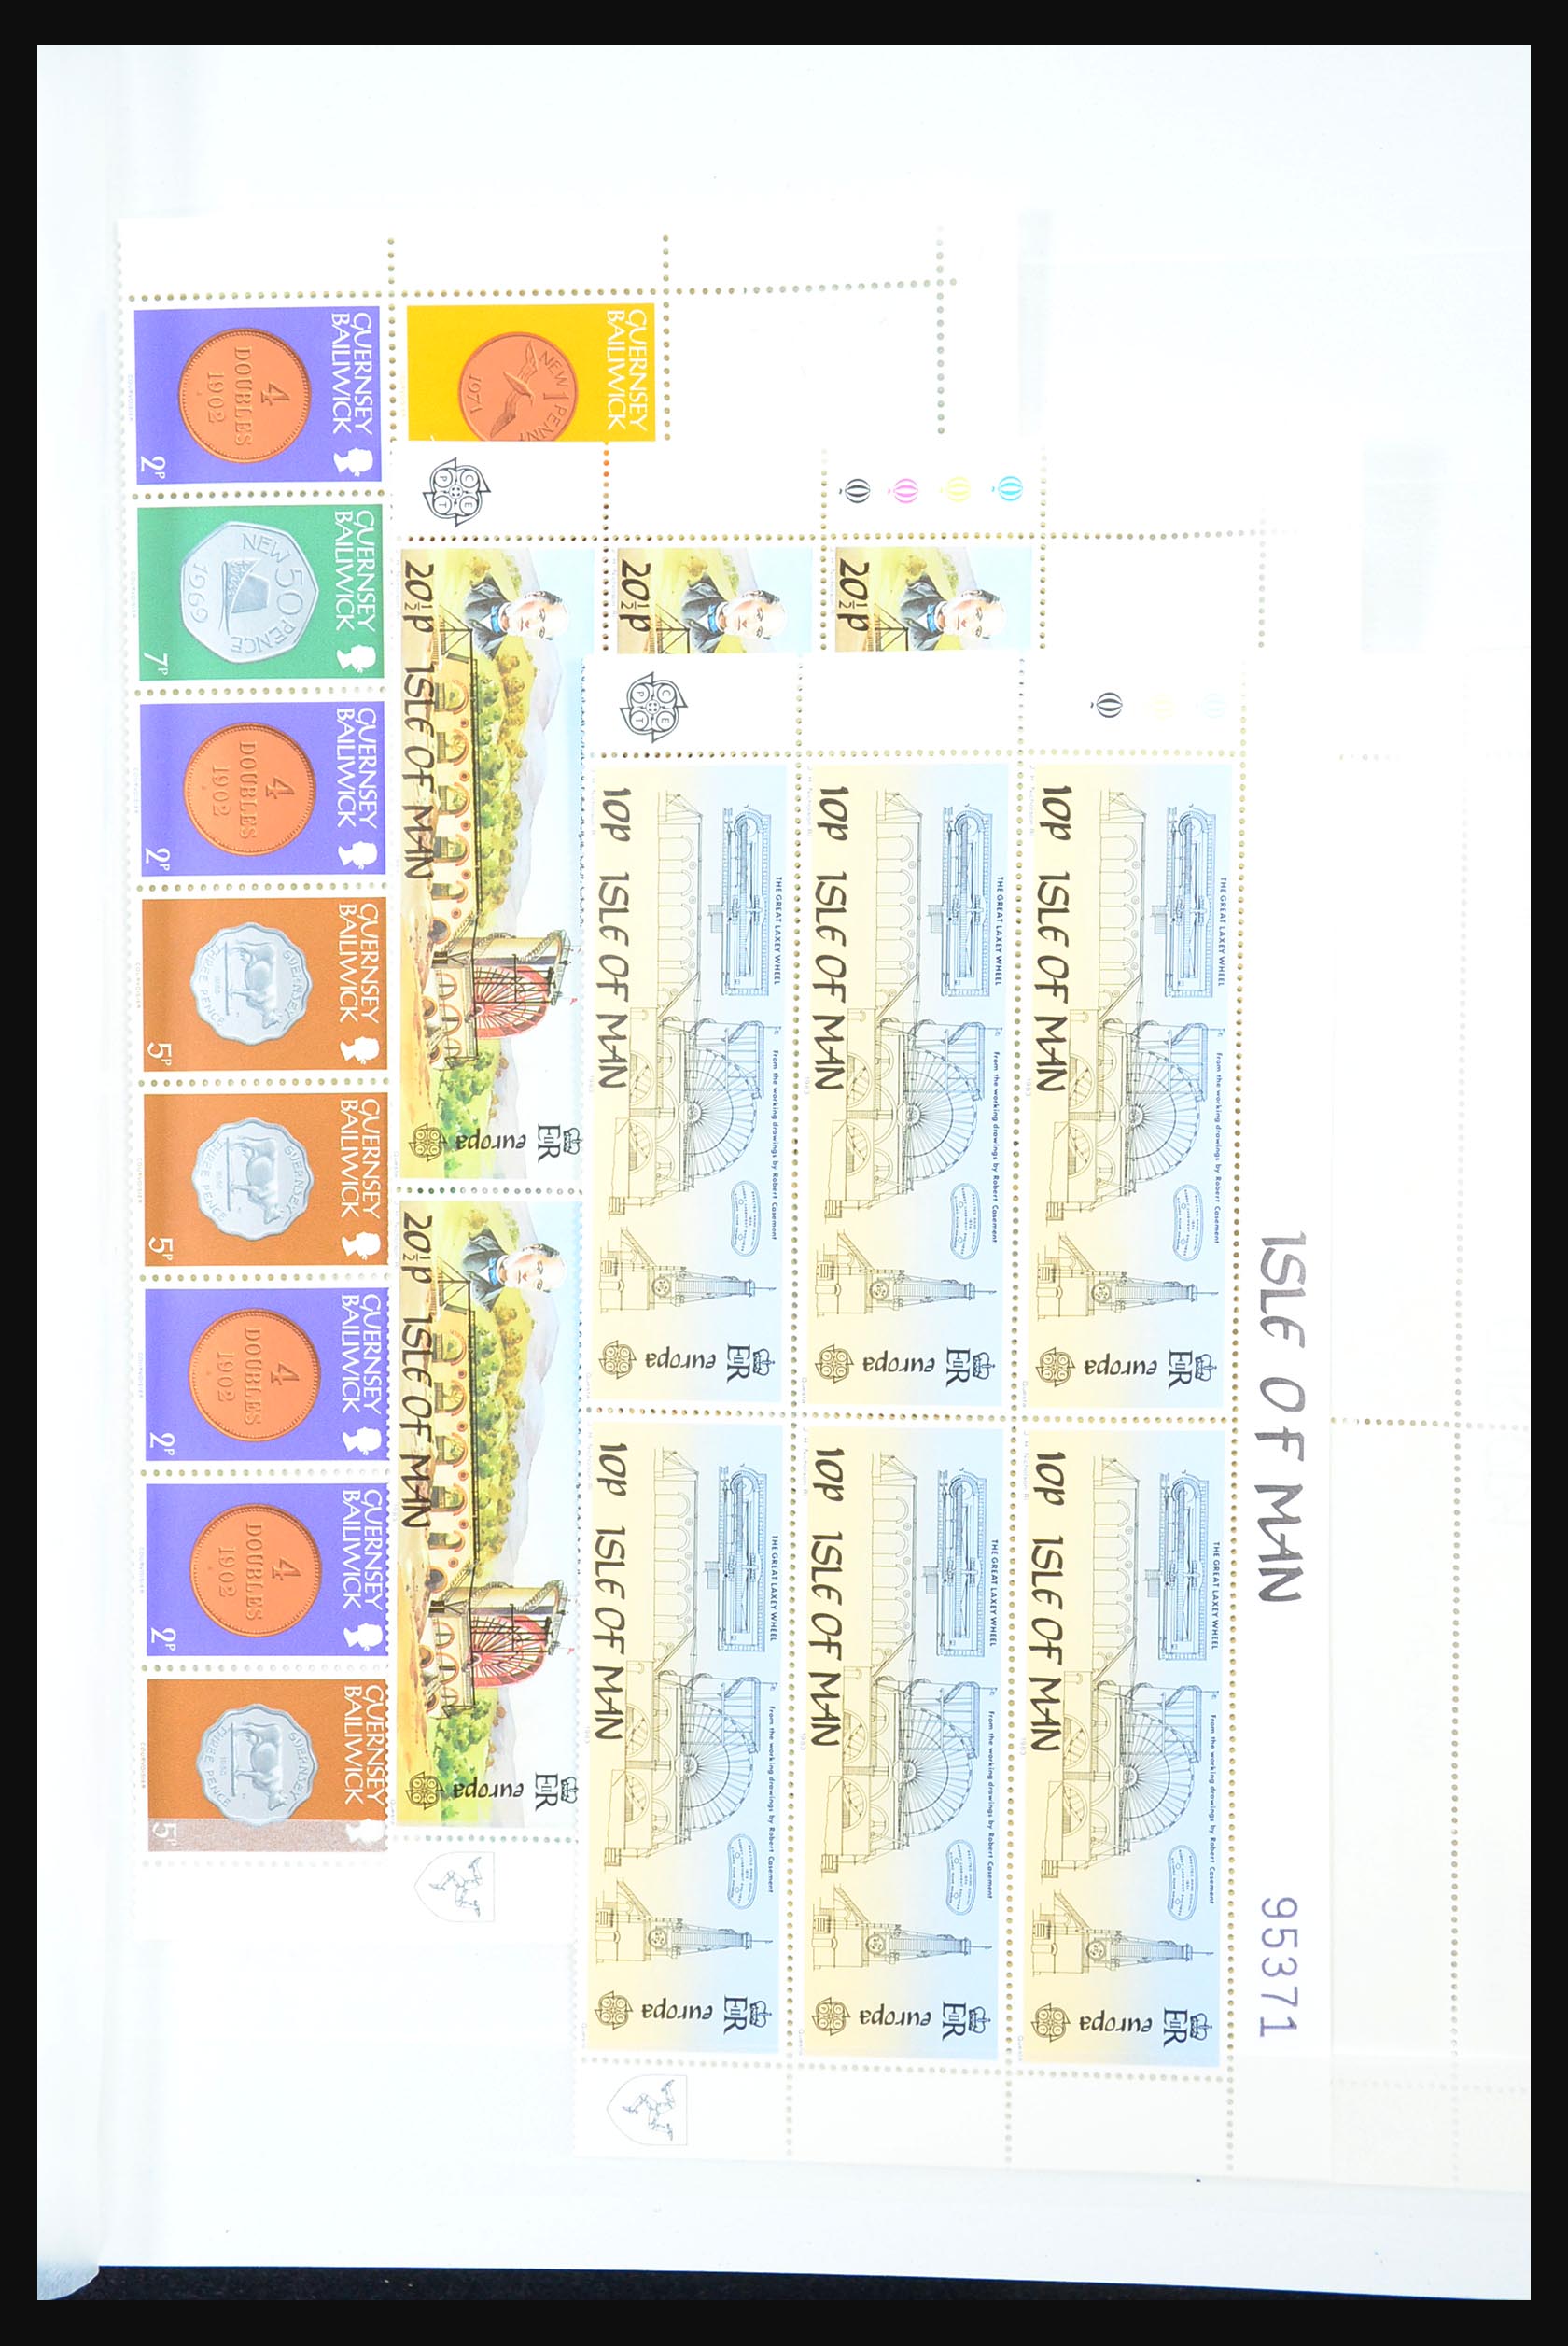 31249 051 - 31249 Channel Islands souvenir sheets and sheetlets 1978-1997.